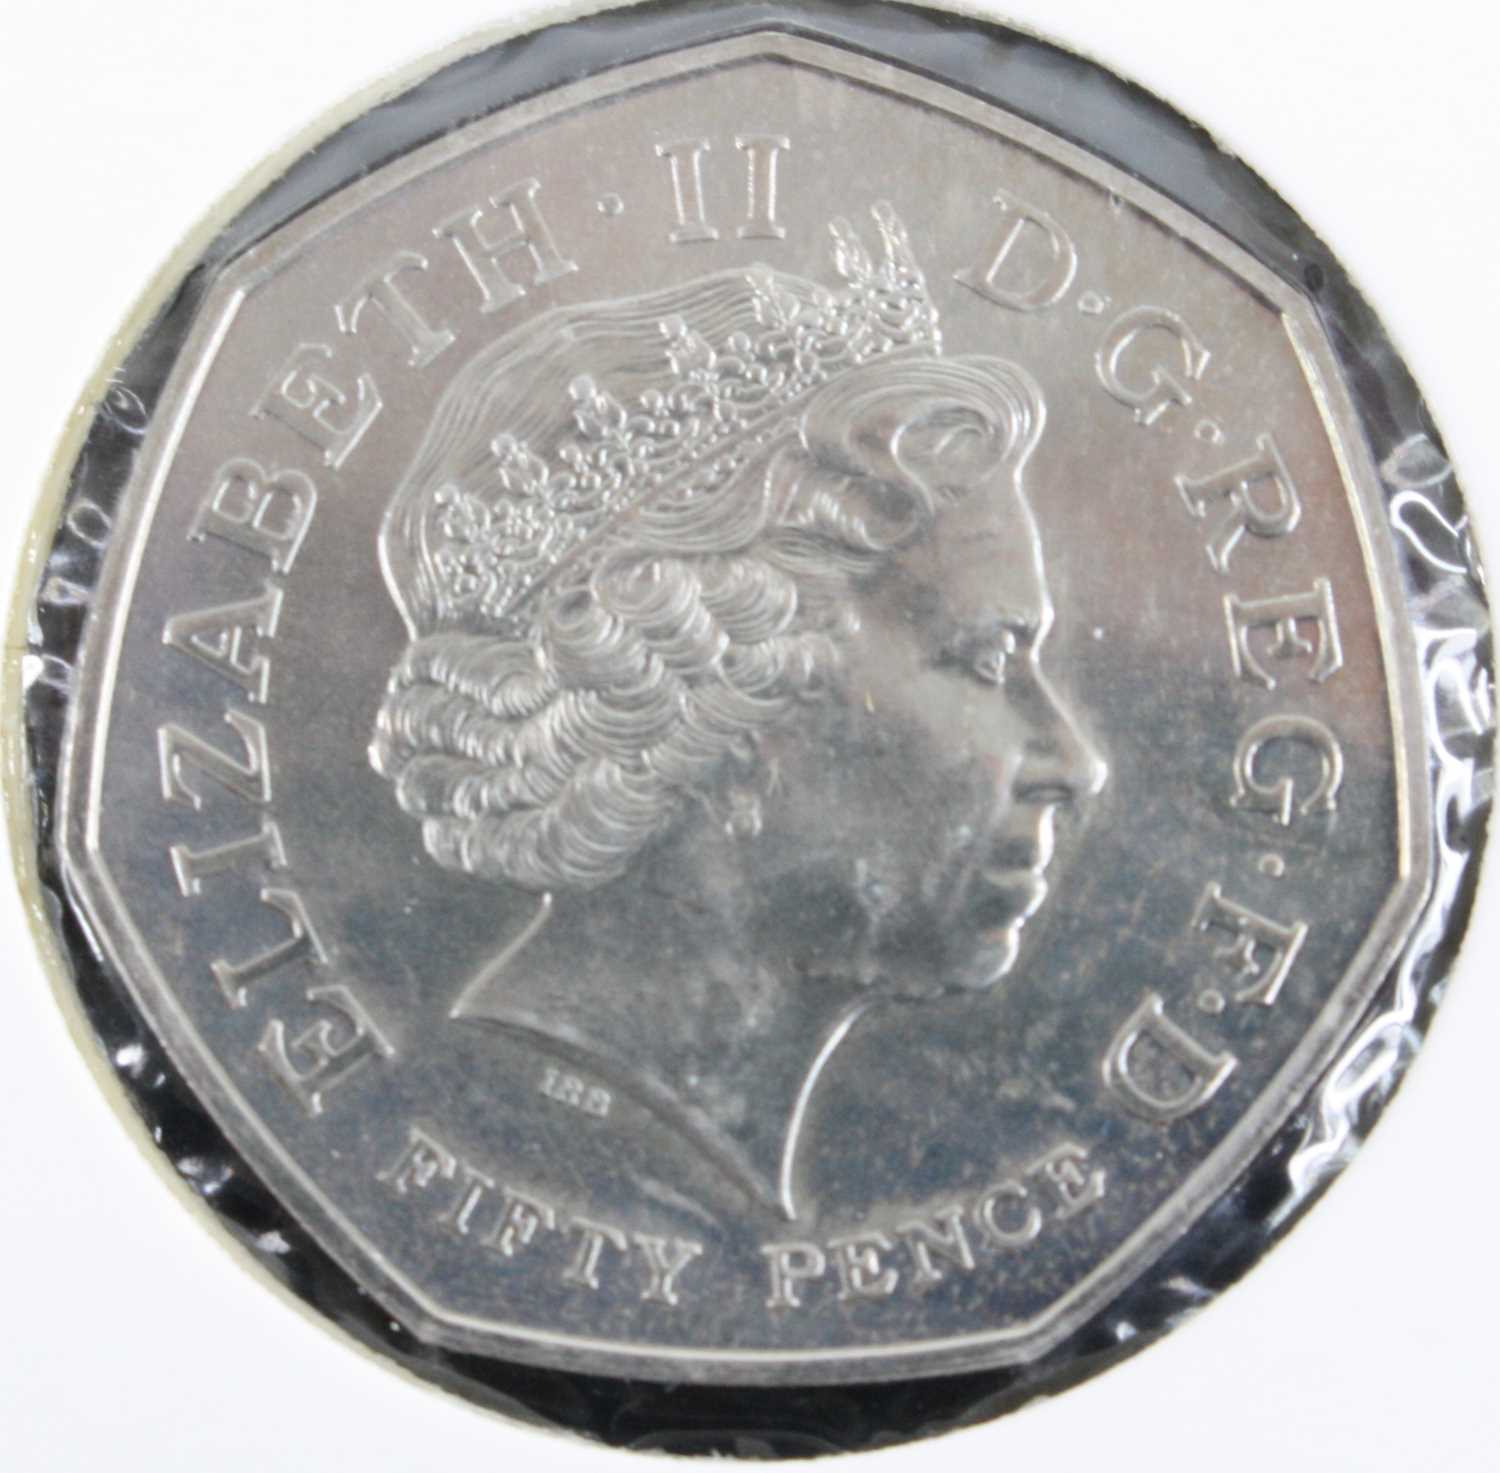 Great Britain, 2009 Kew Gardens 50 pence piece, obv; Elizabeth II 4th crowned portrait, rev;